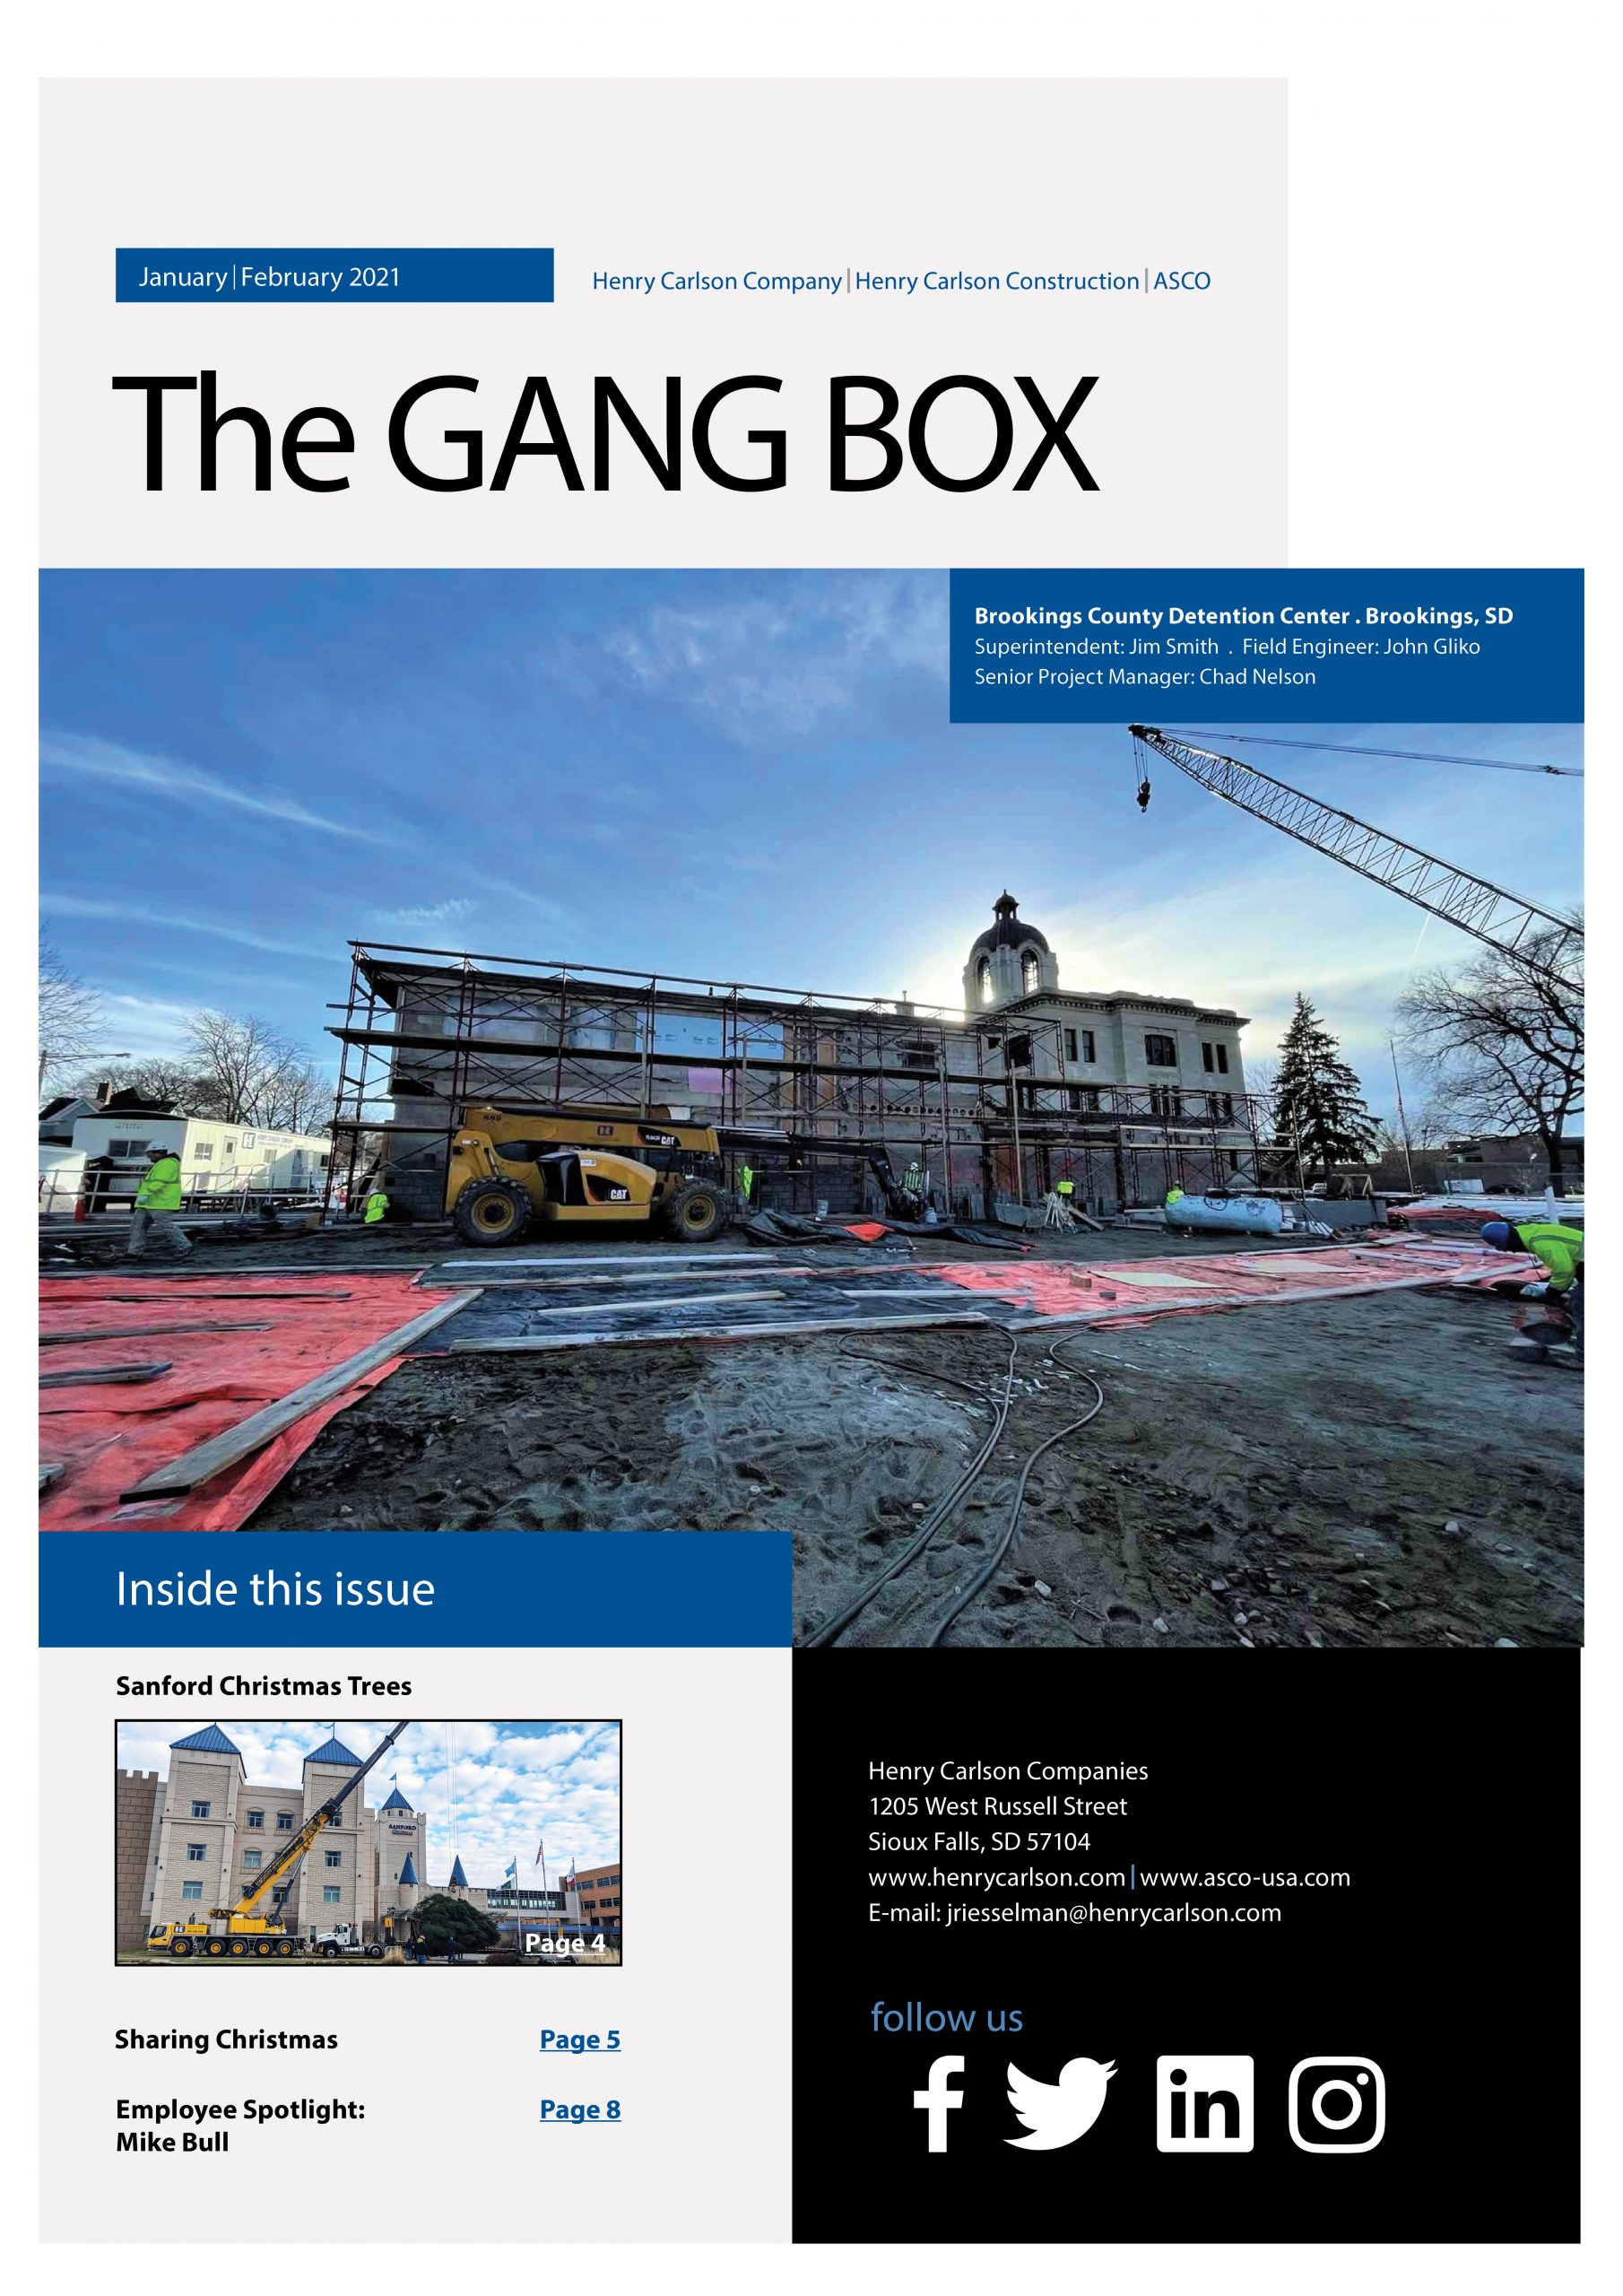 January/February 2021 Gang Box